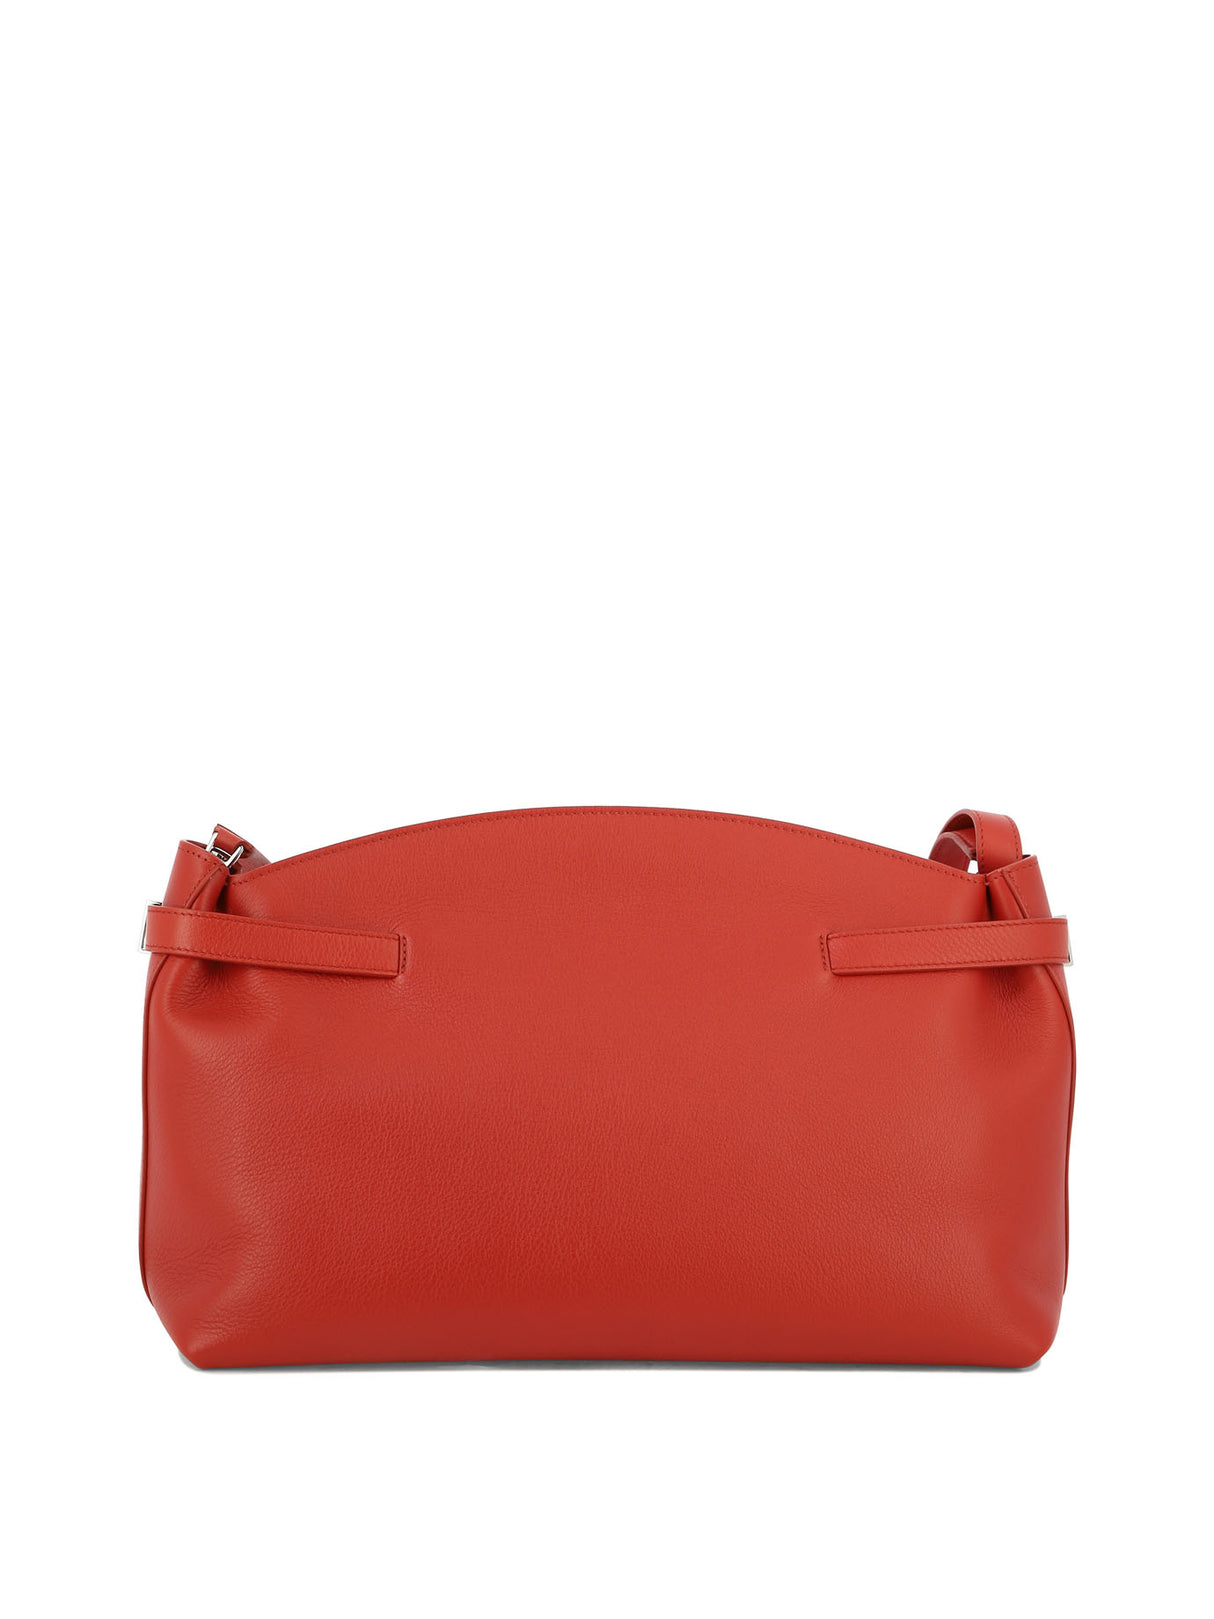 FERRAGAMO Sophisticated Crossbody Handbag in Fiery Red for the Fashionable Woman